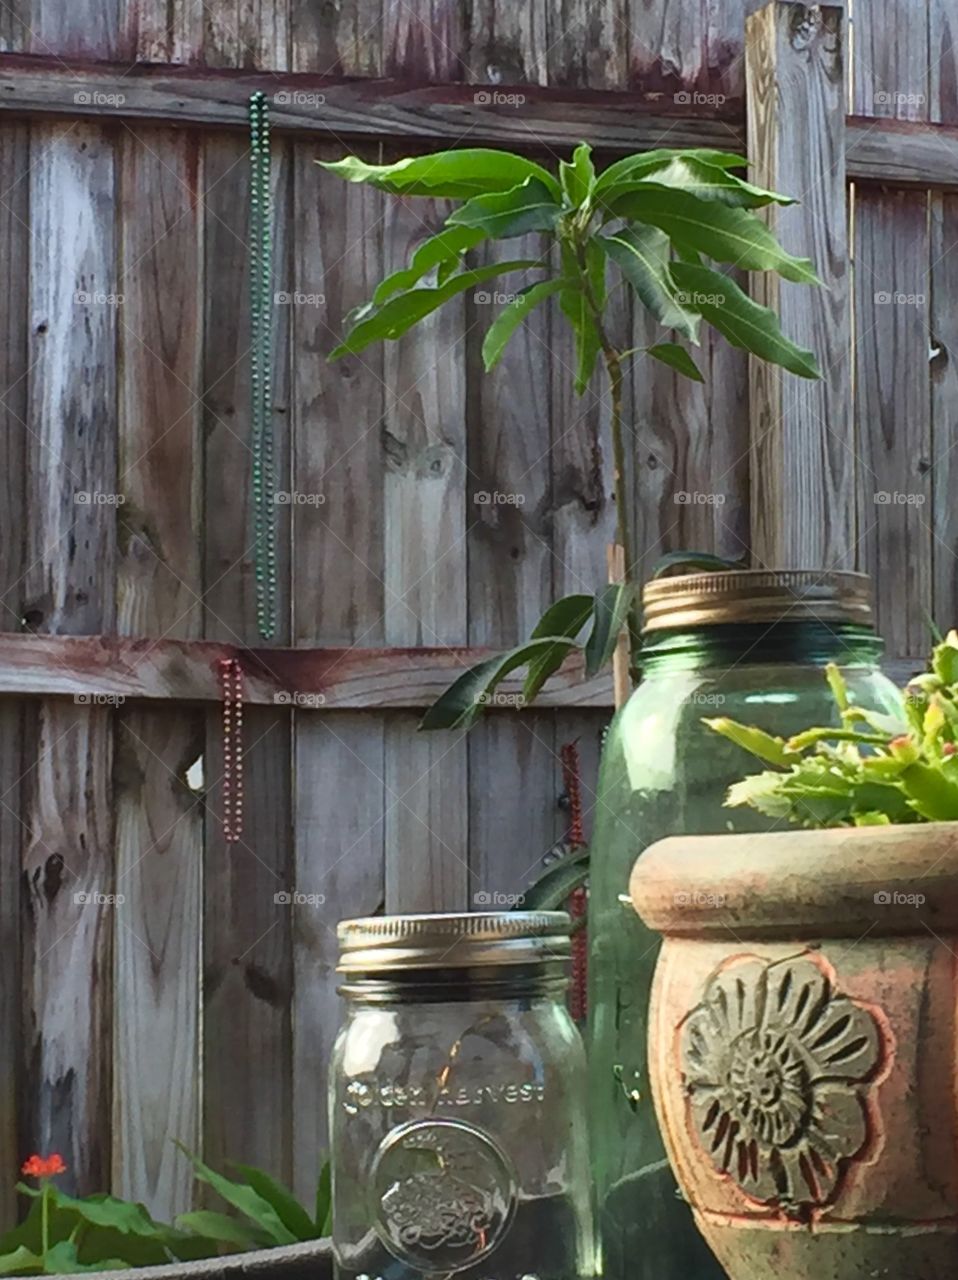 Color. Glass. Jars. Light. Texture. Wood. Mango tree. Christmas Cactus. Flower Pot. Mardi Gras Beads. Fence. Garden Decor. Outdoors. Vintage. Country. 